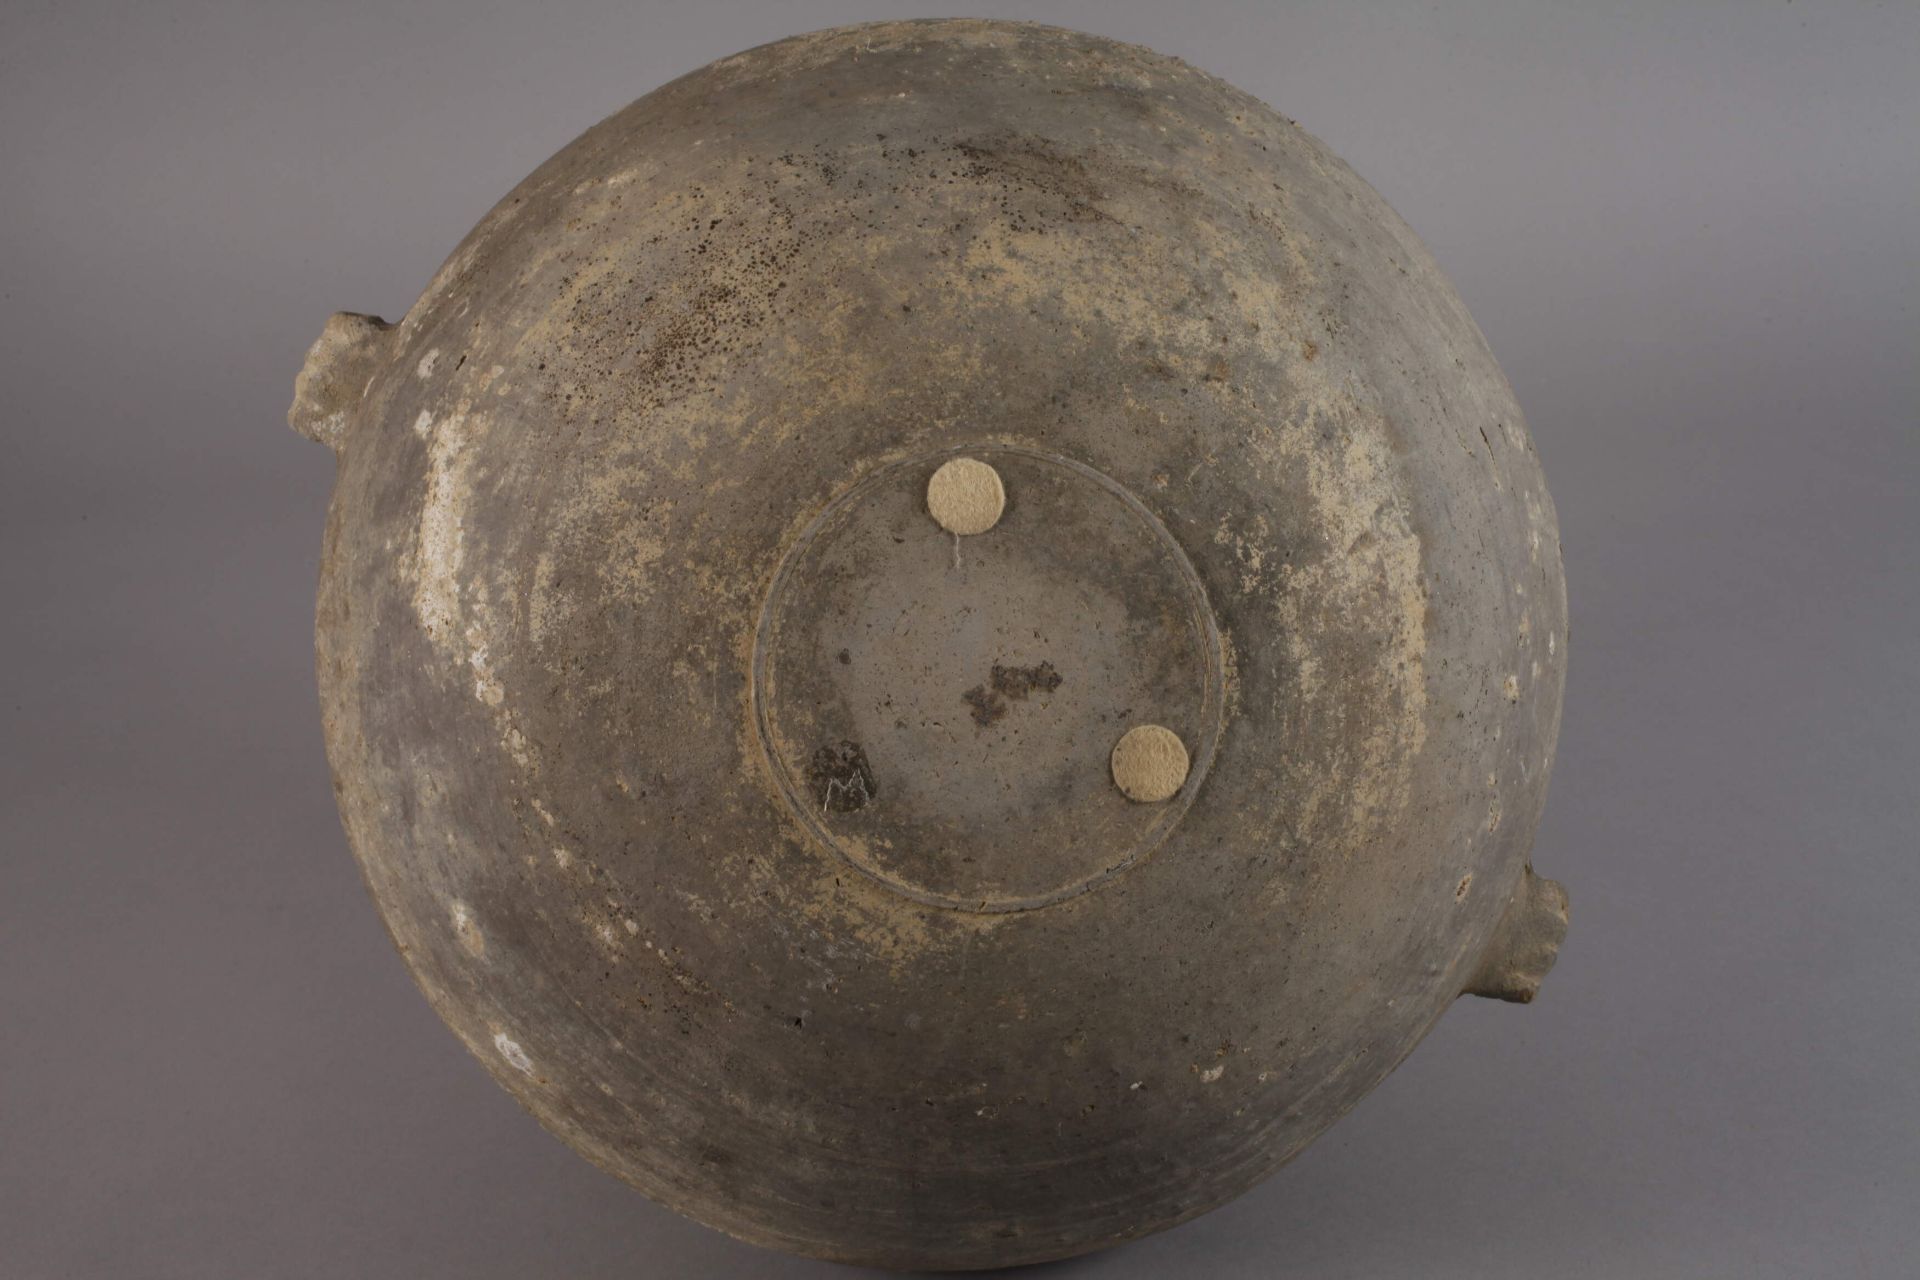 Han dynasty storage vessel - Image 4 of 6